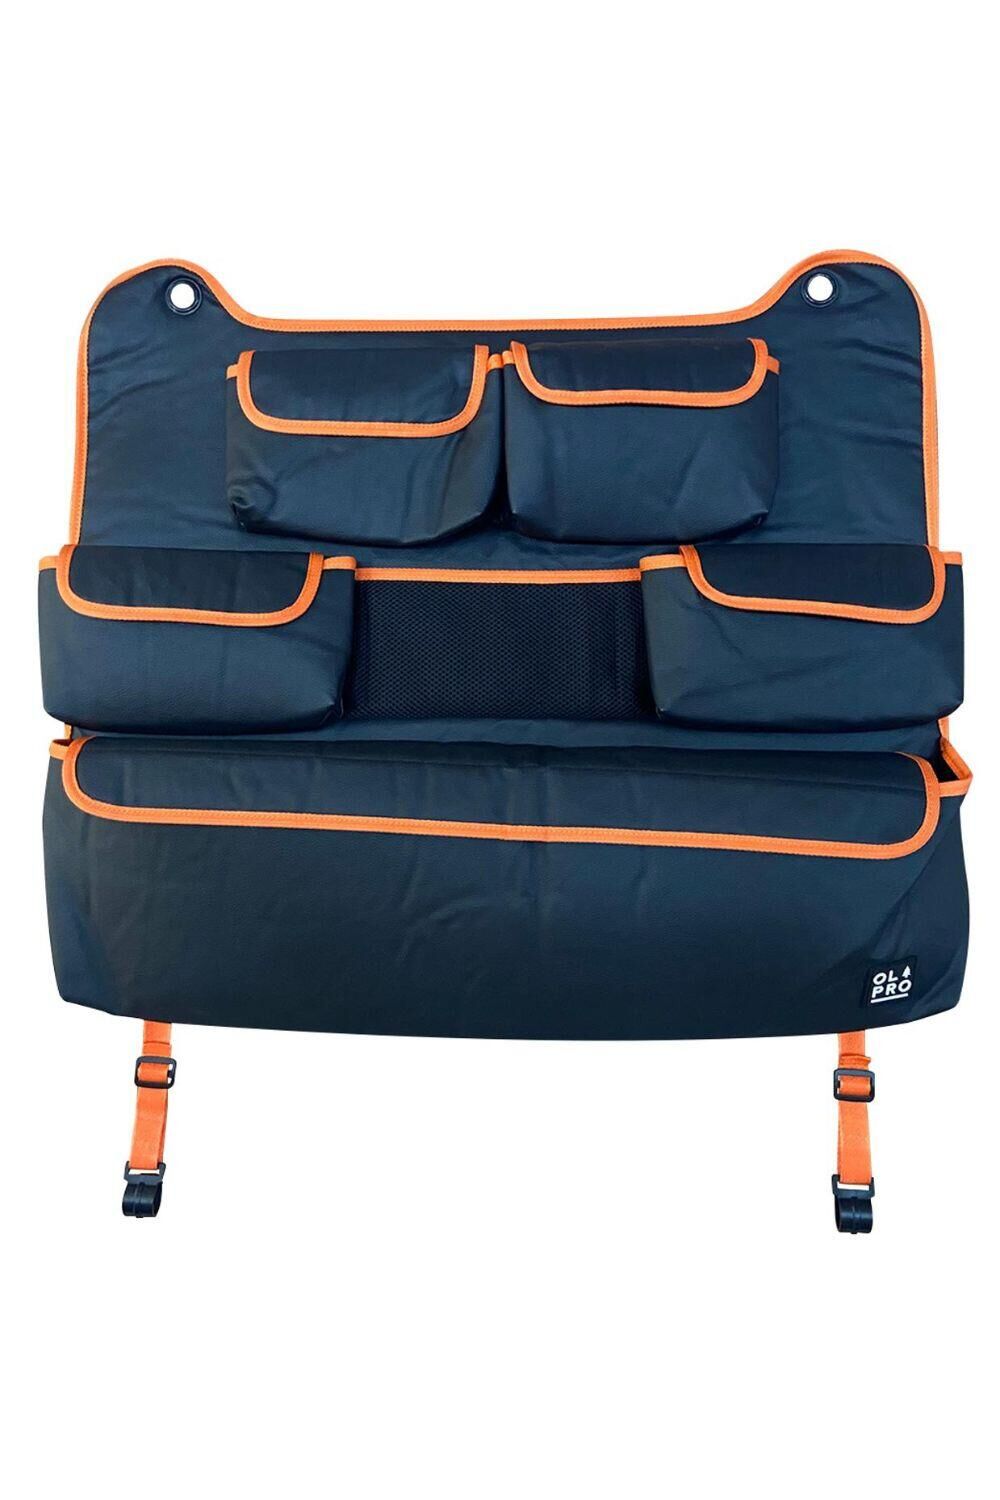 OLPRO OLPRO Double Seat Organiser Orange